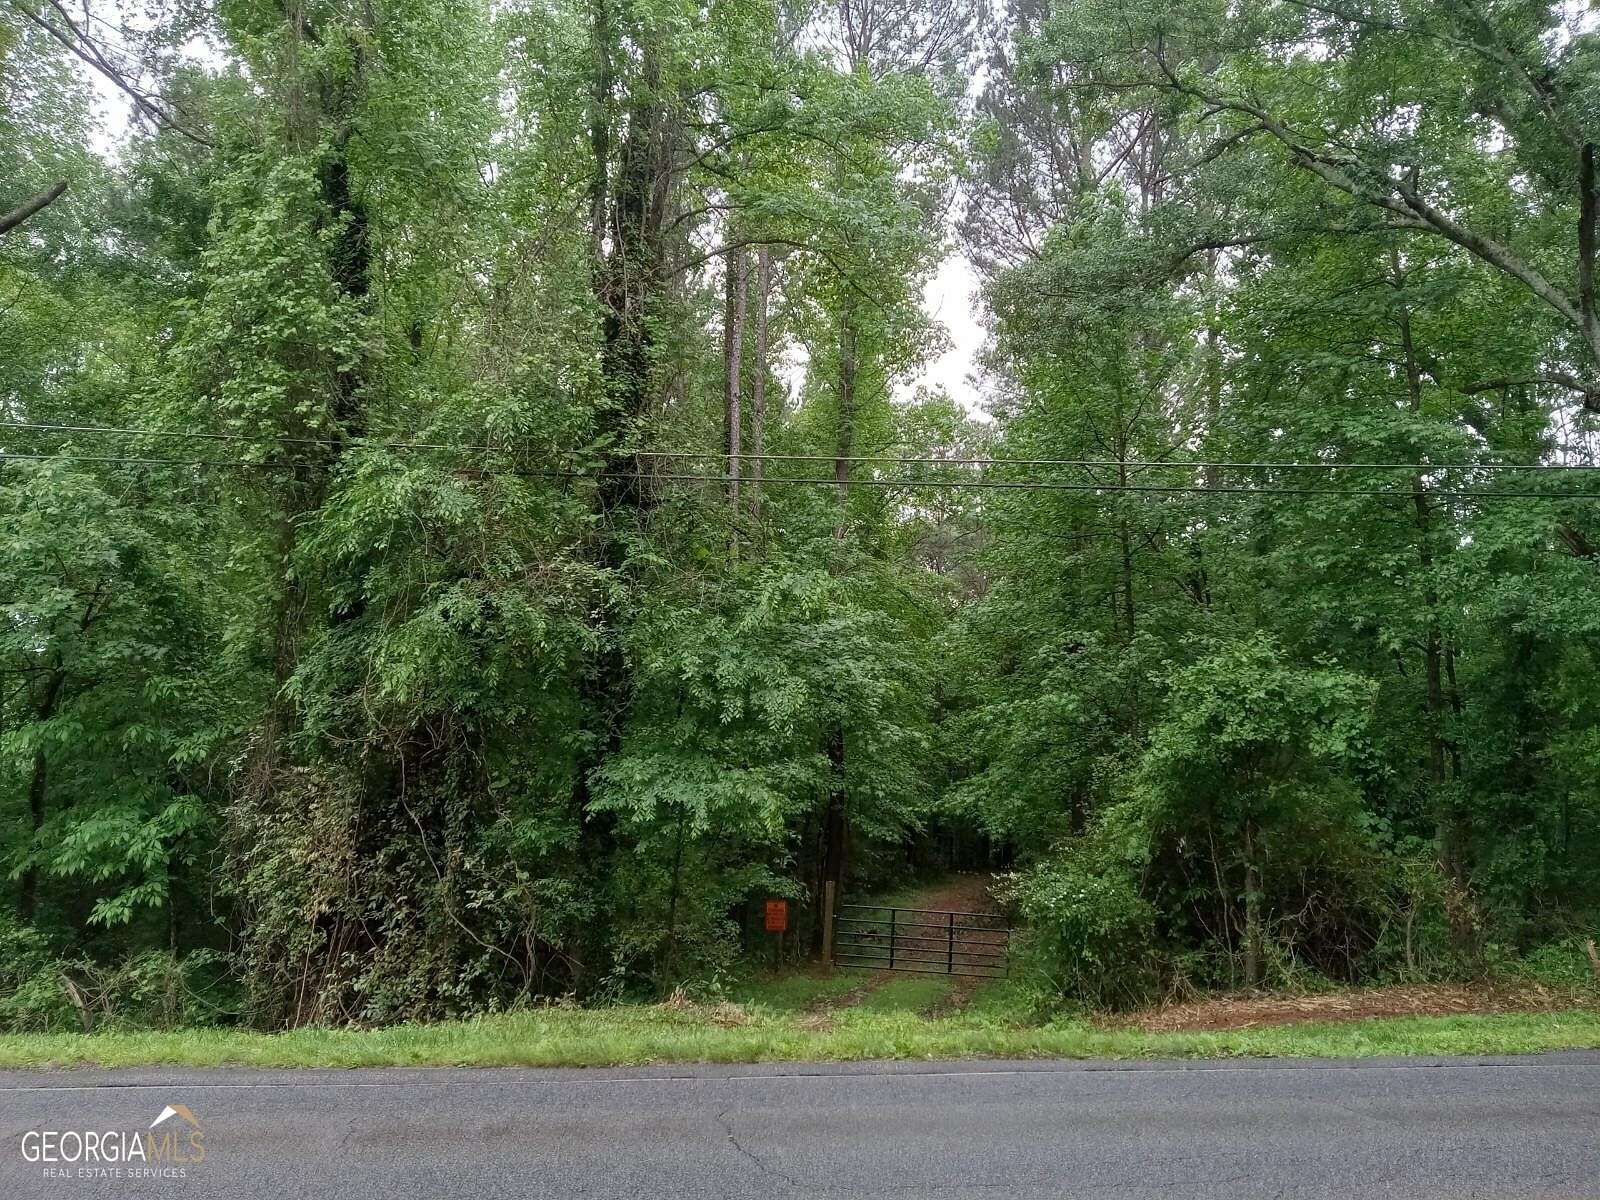 47 Acres of Mixed-Use Land for Sale in Stockbridge, Georgia